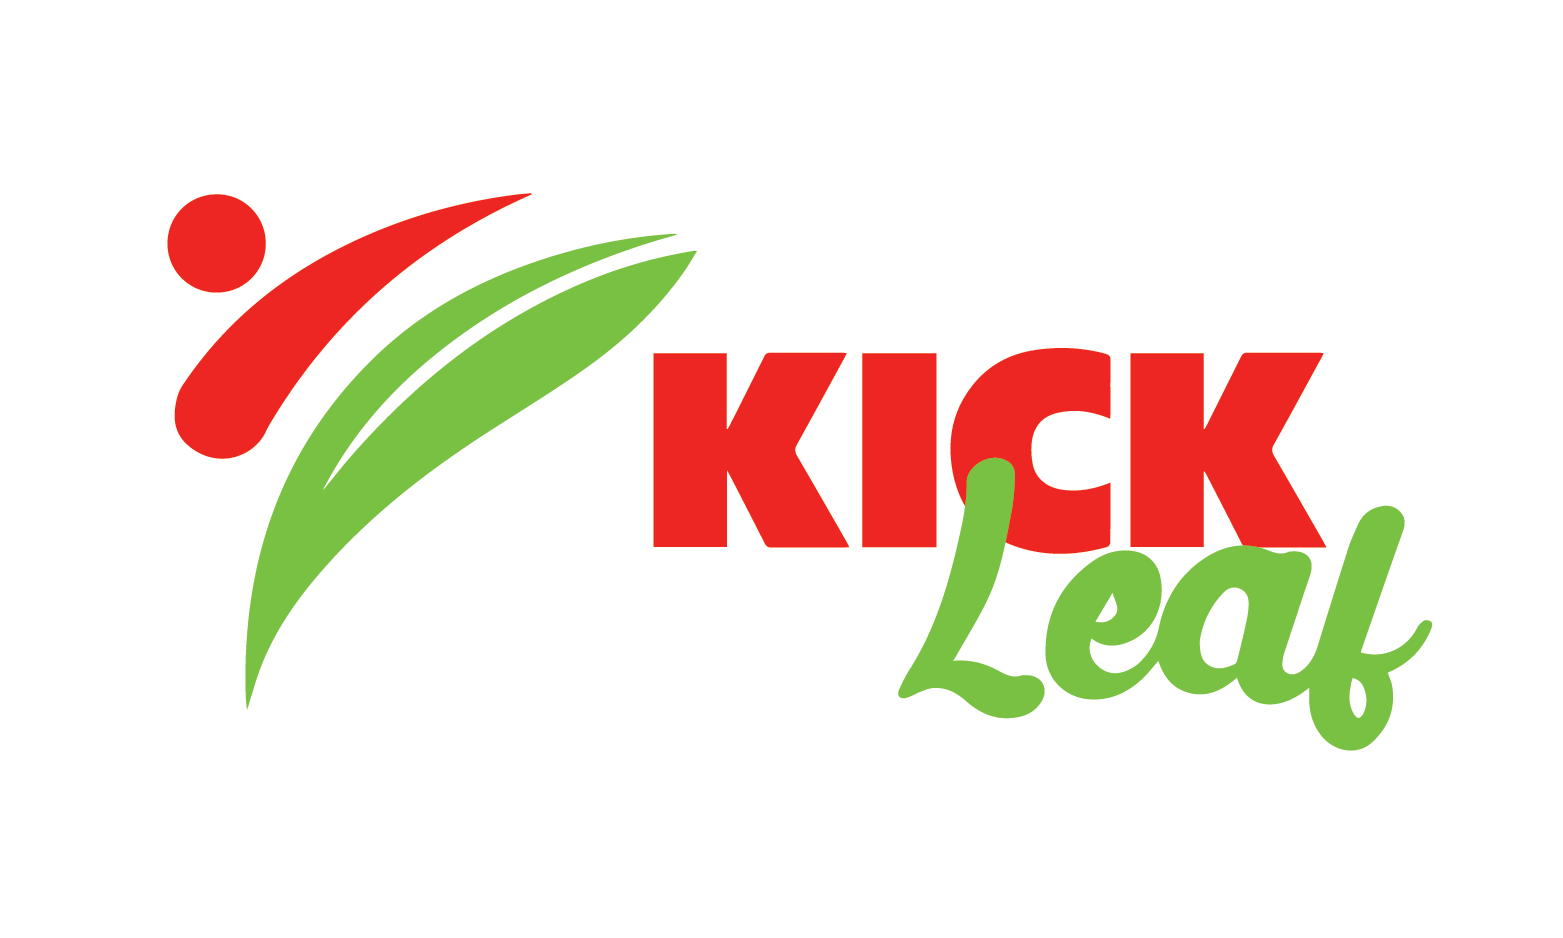 KickLeaf.com - Creative brandable domain for sale